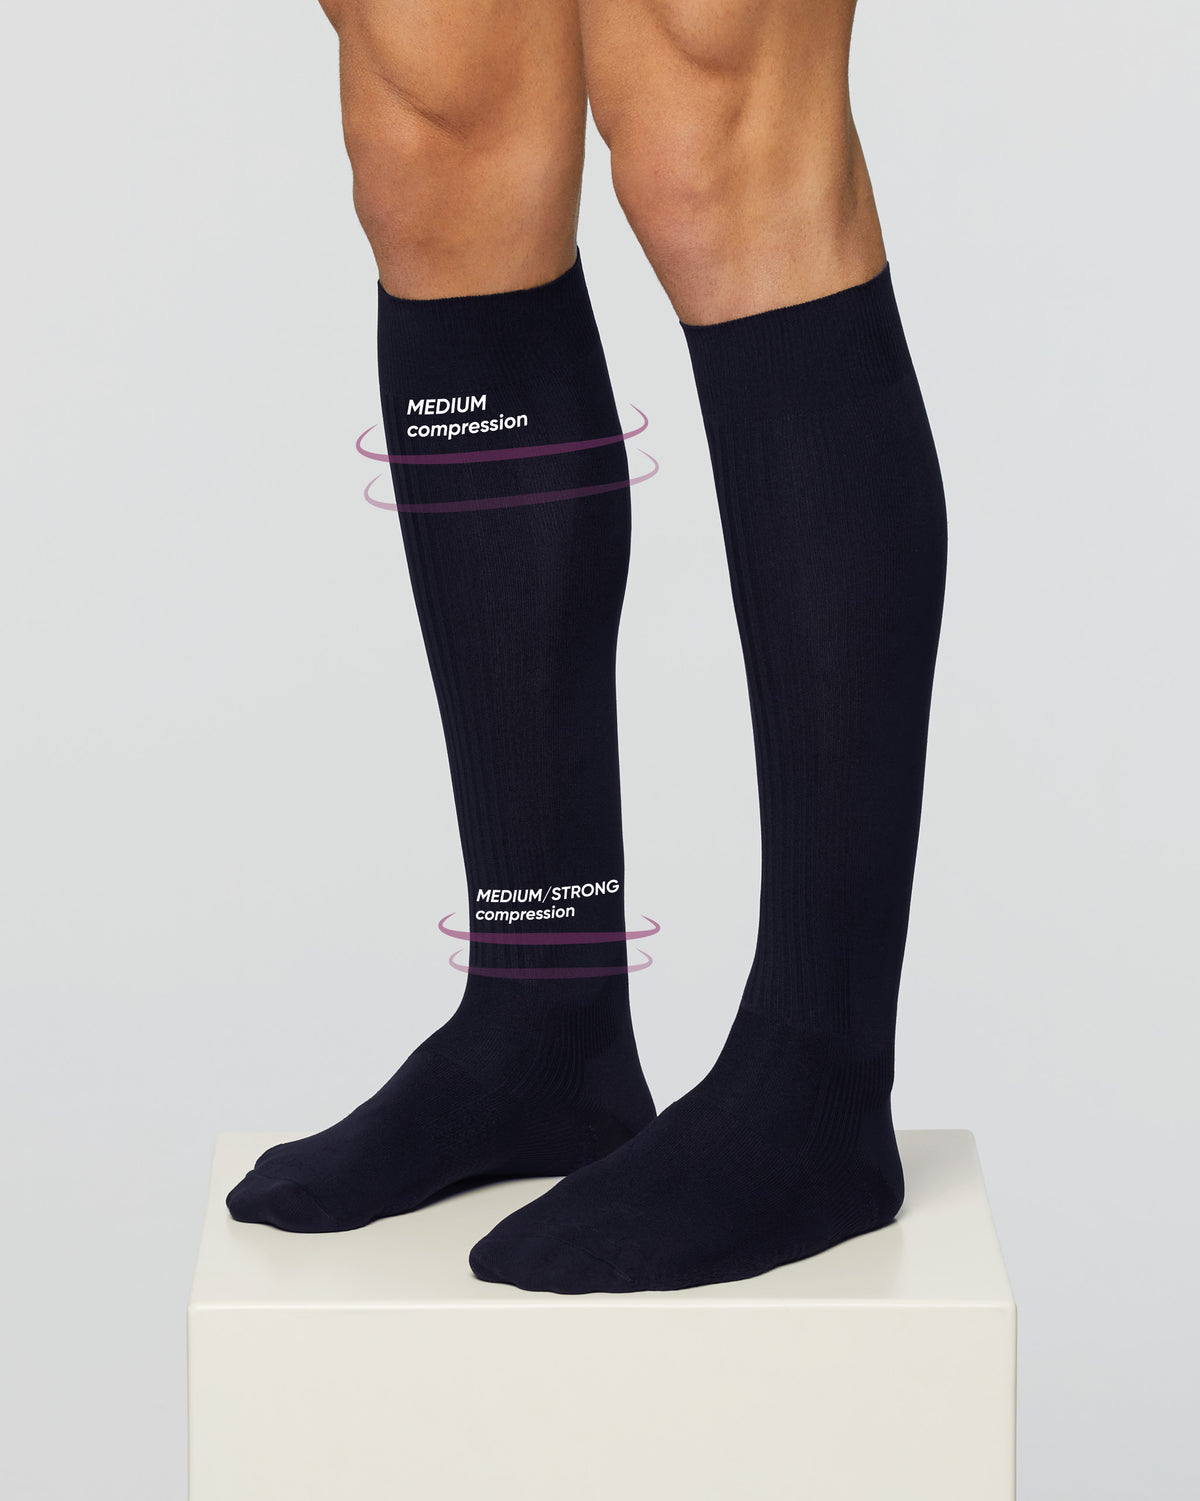 Entspannende 70-Denier-Socke mit mittlerer abgestufter Kompression